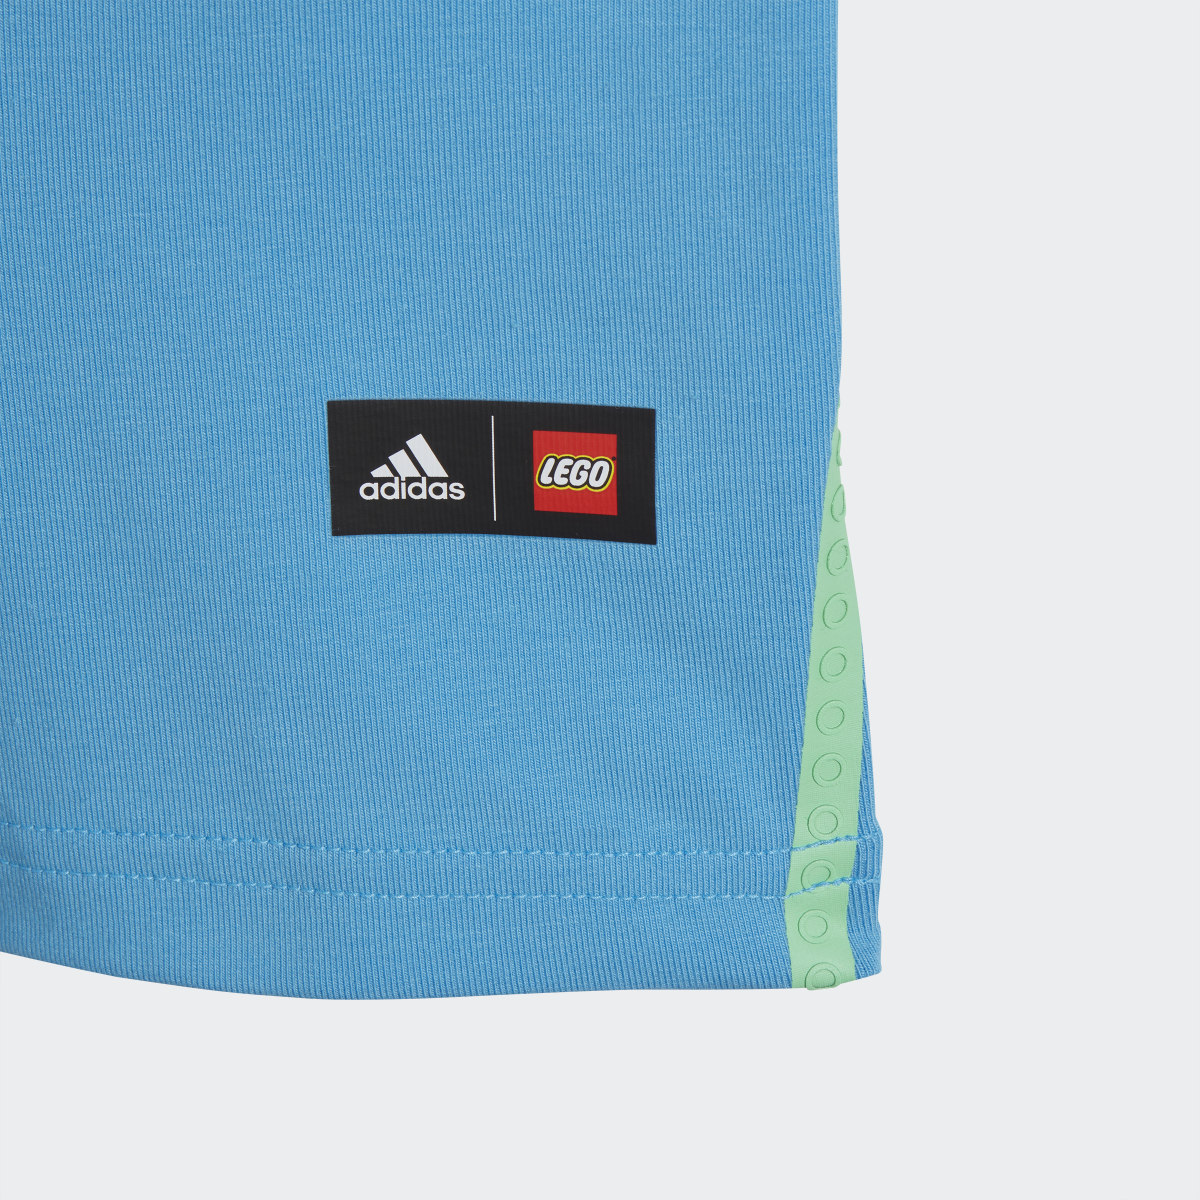 Adidas x Classic LEGO® Tişört ve Kısa Tayt Takımı. 8